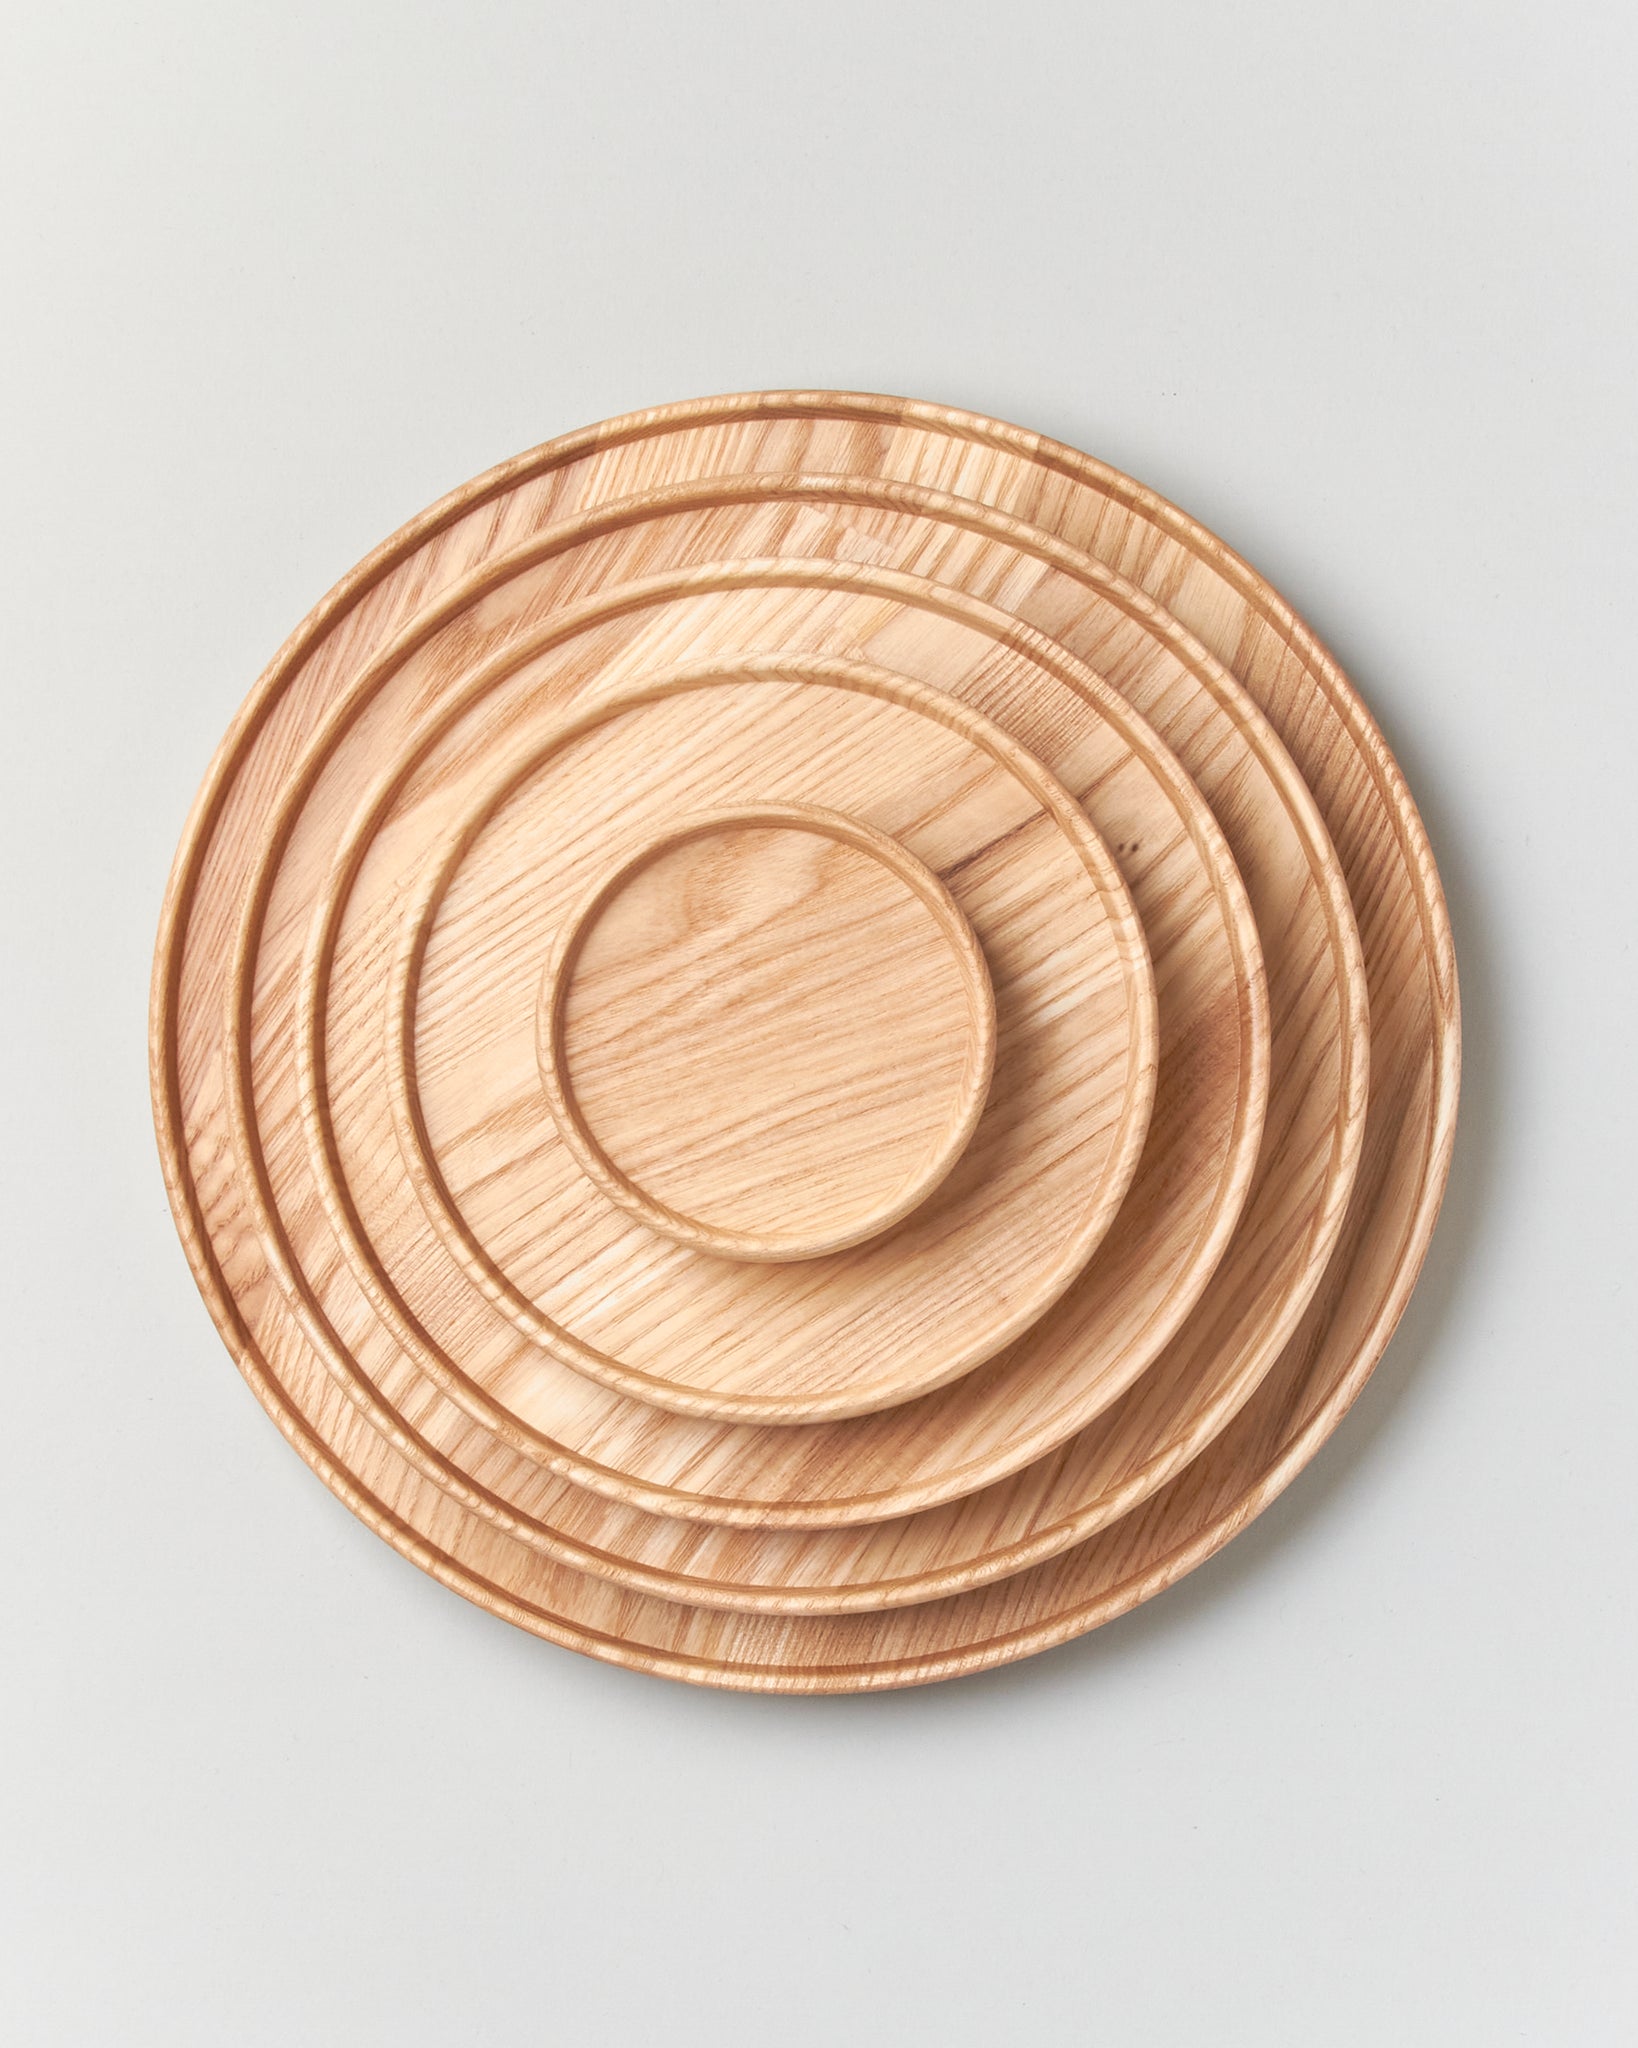 Hasami 3 3/8-inch Wood Tray